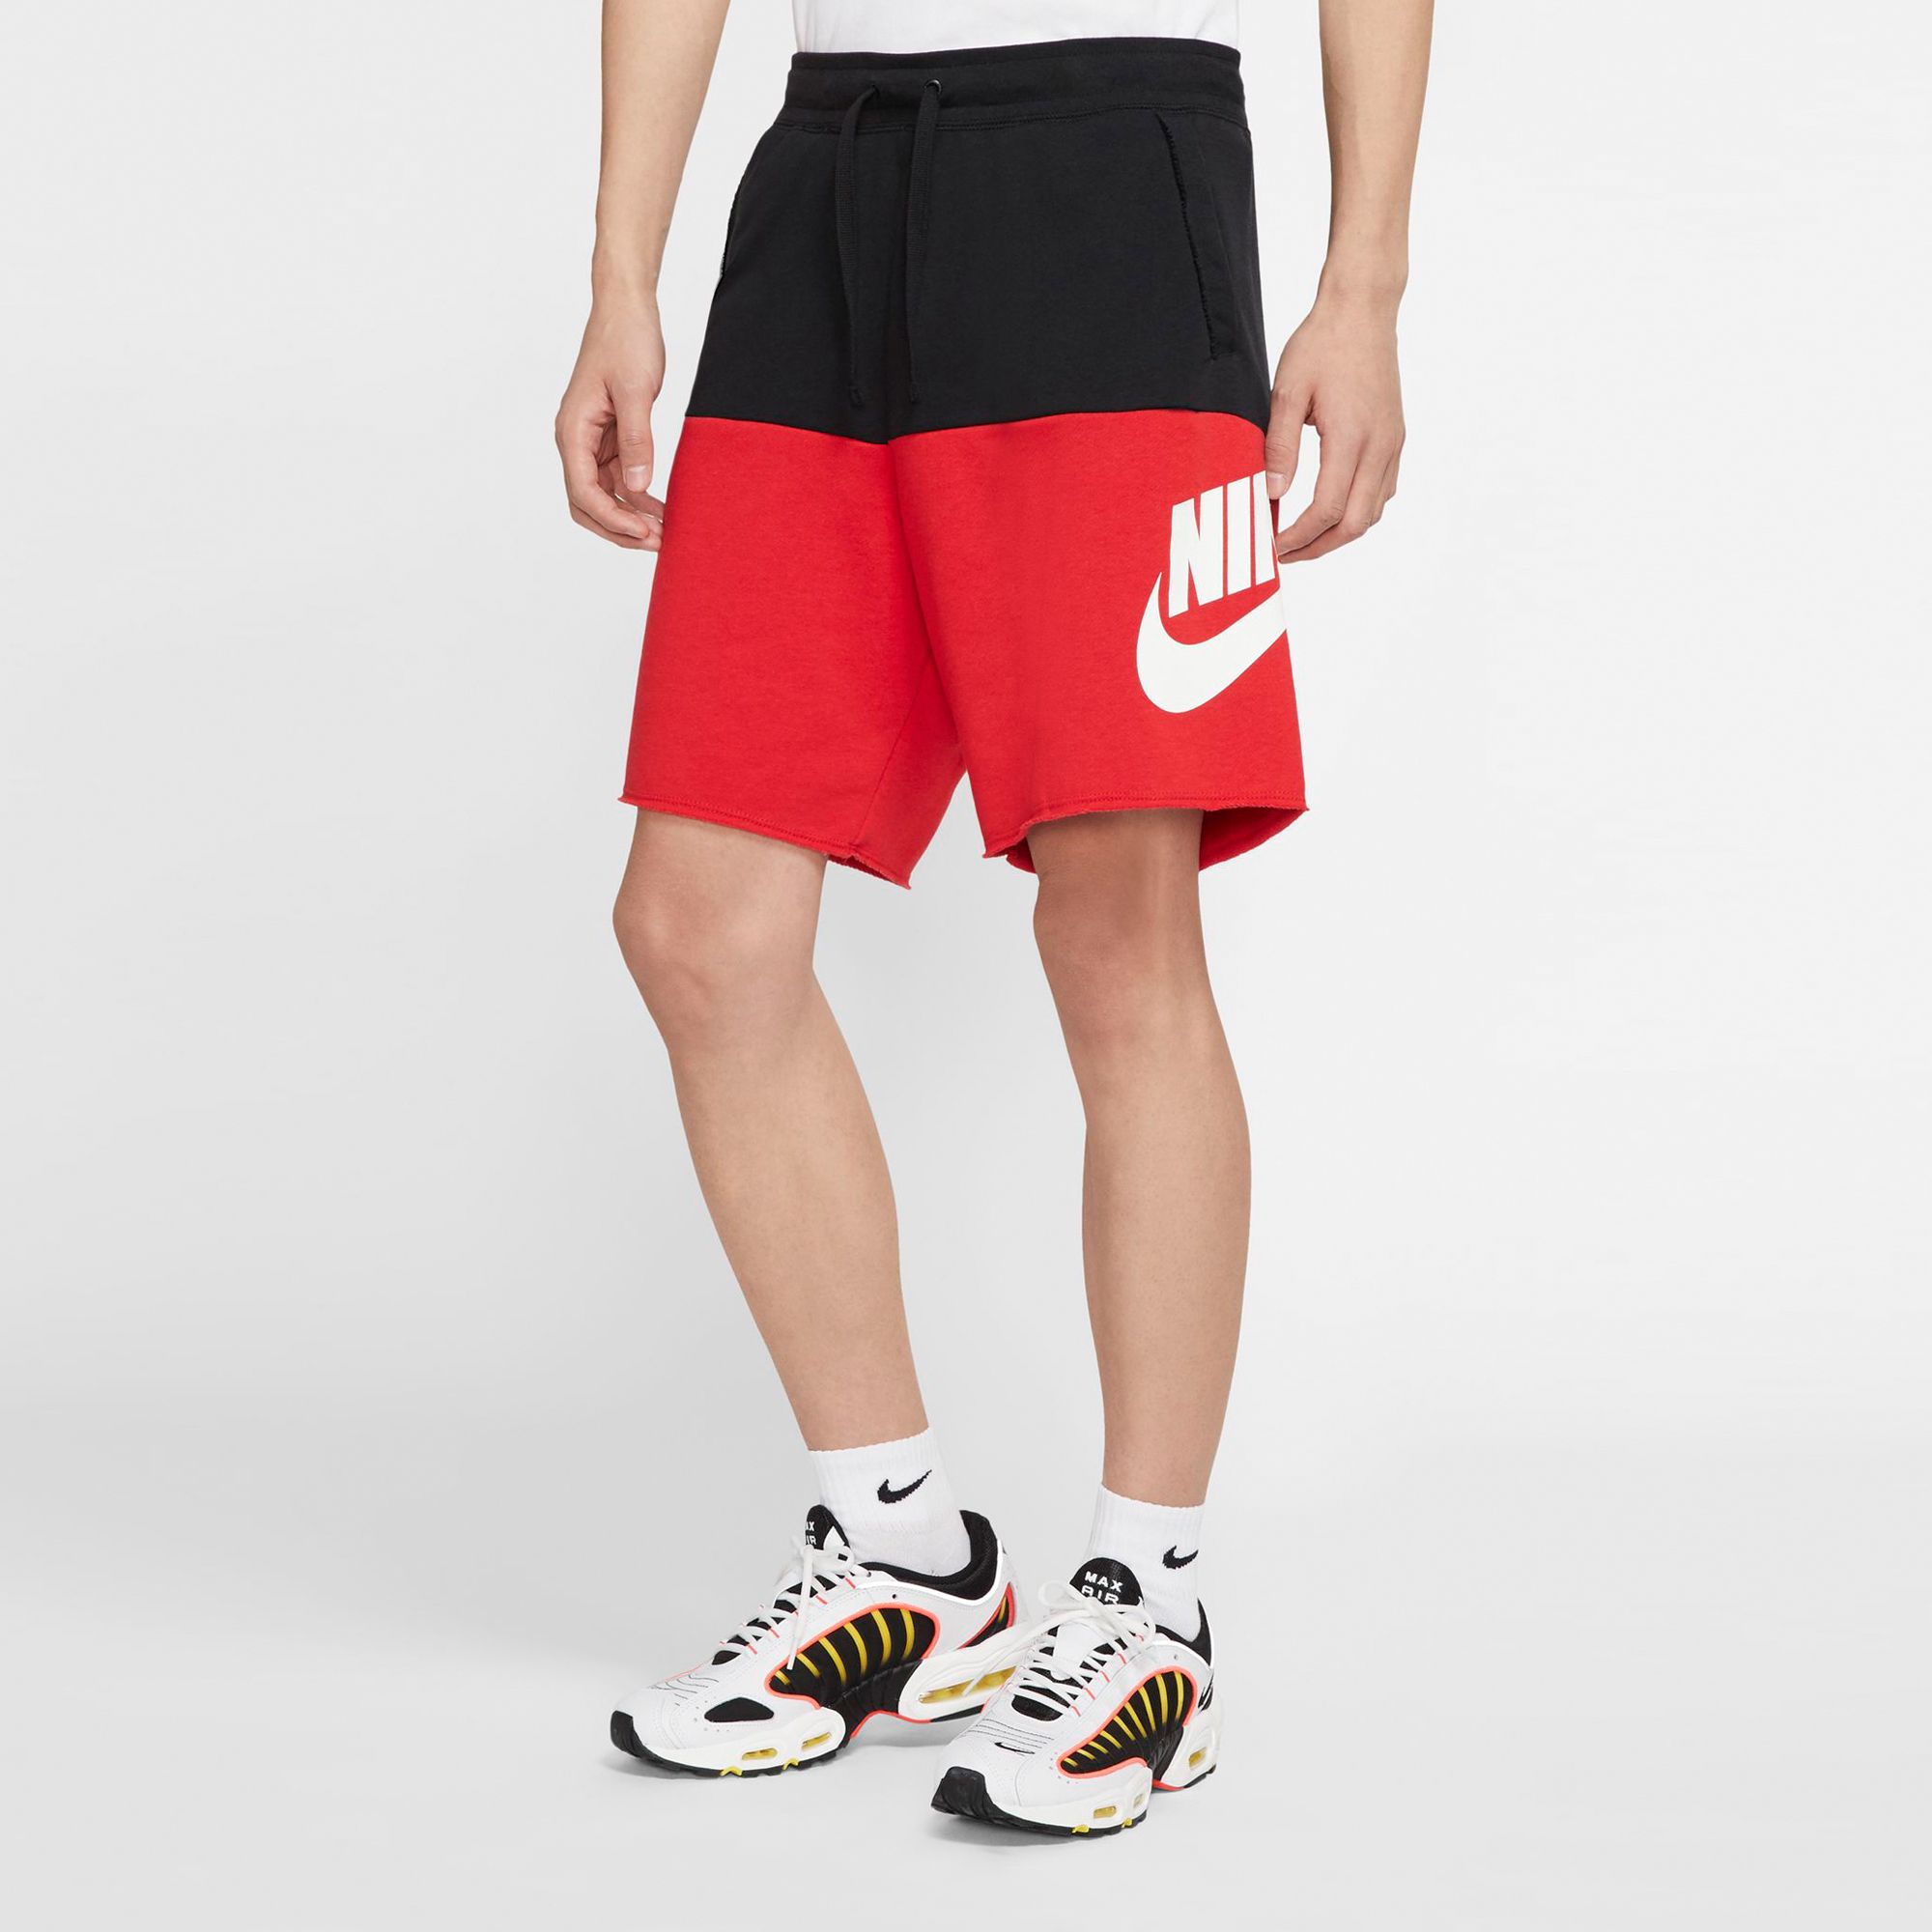 Nike Men's Sportswear Alumni Colourblock Shorts | Shorts | Clothing ...